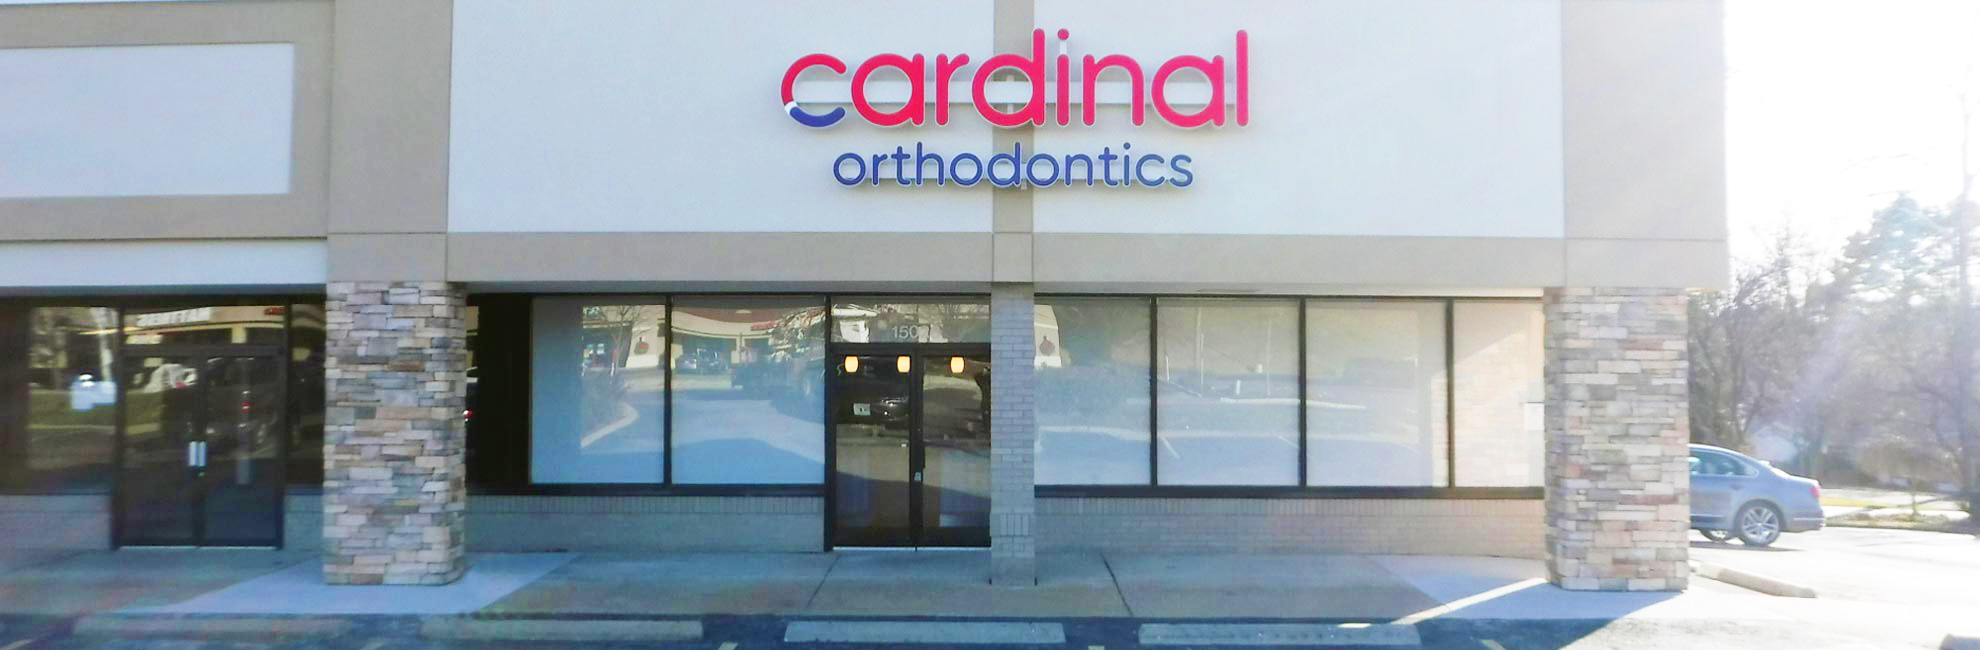 Cardinal Orthodontics Ballwin Location